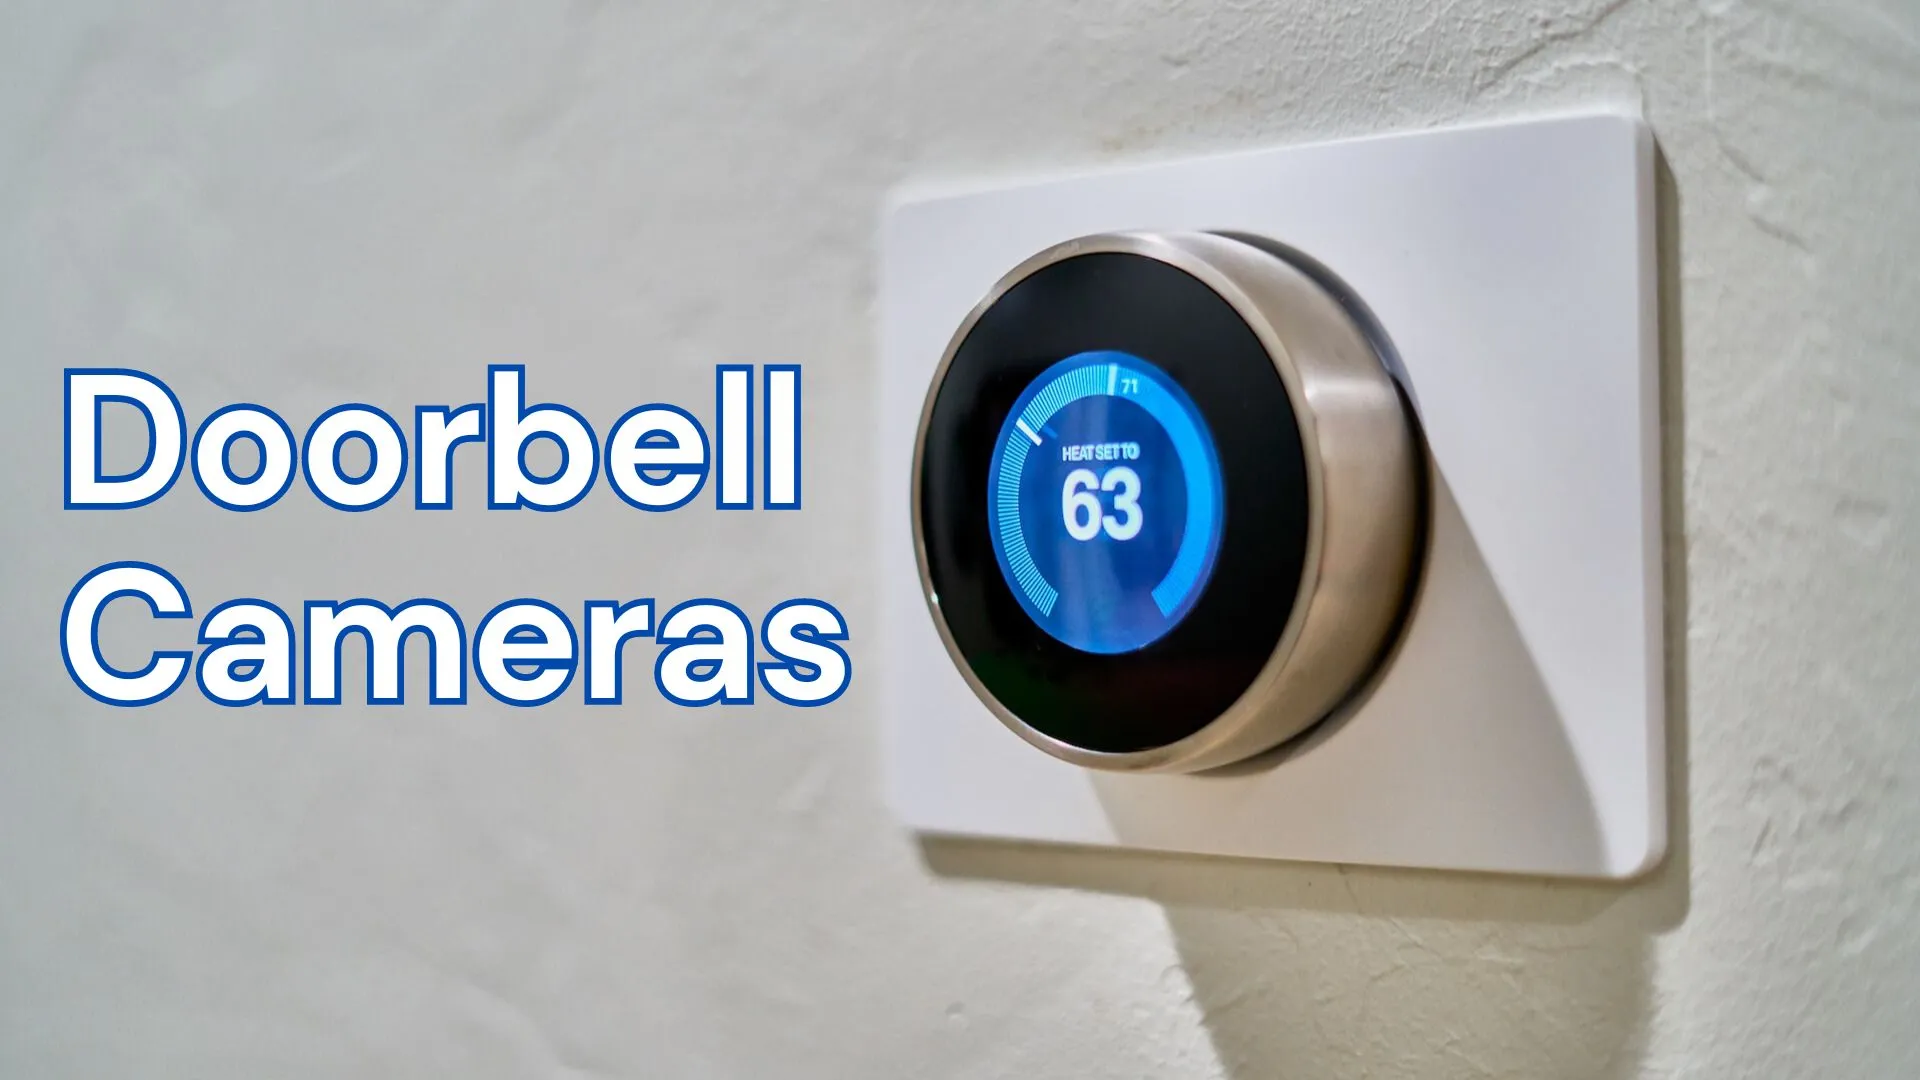 A close-up of "Doorbell cameras" for enhanced home security.